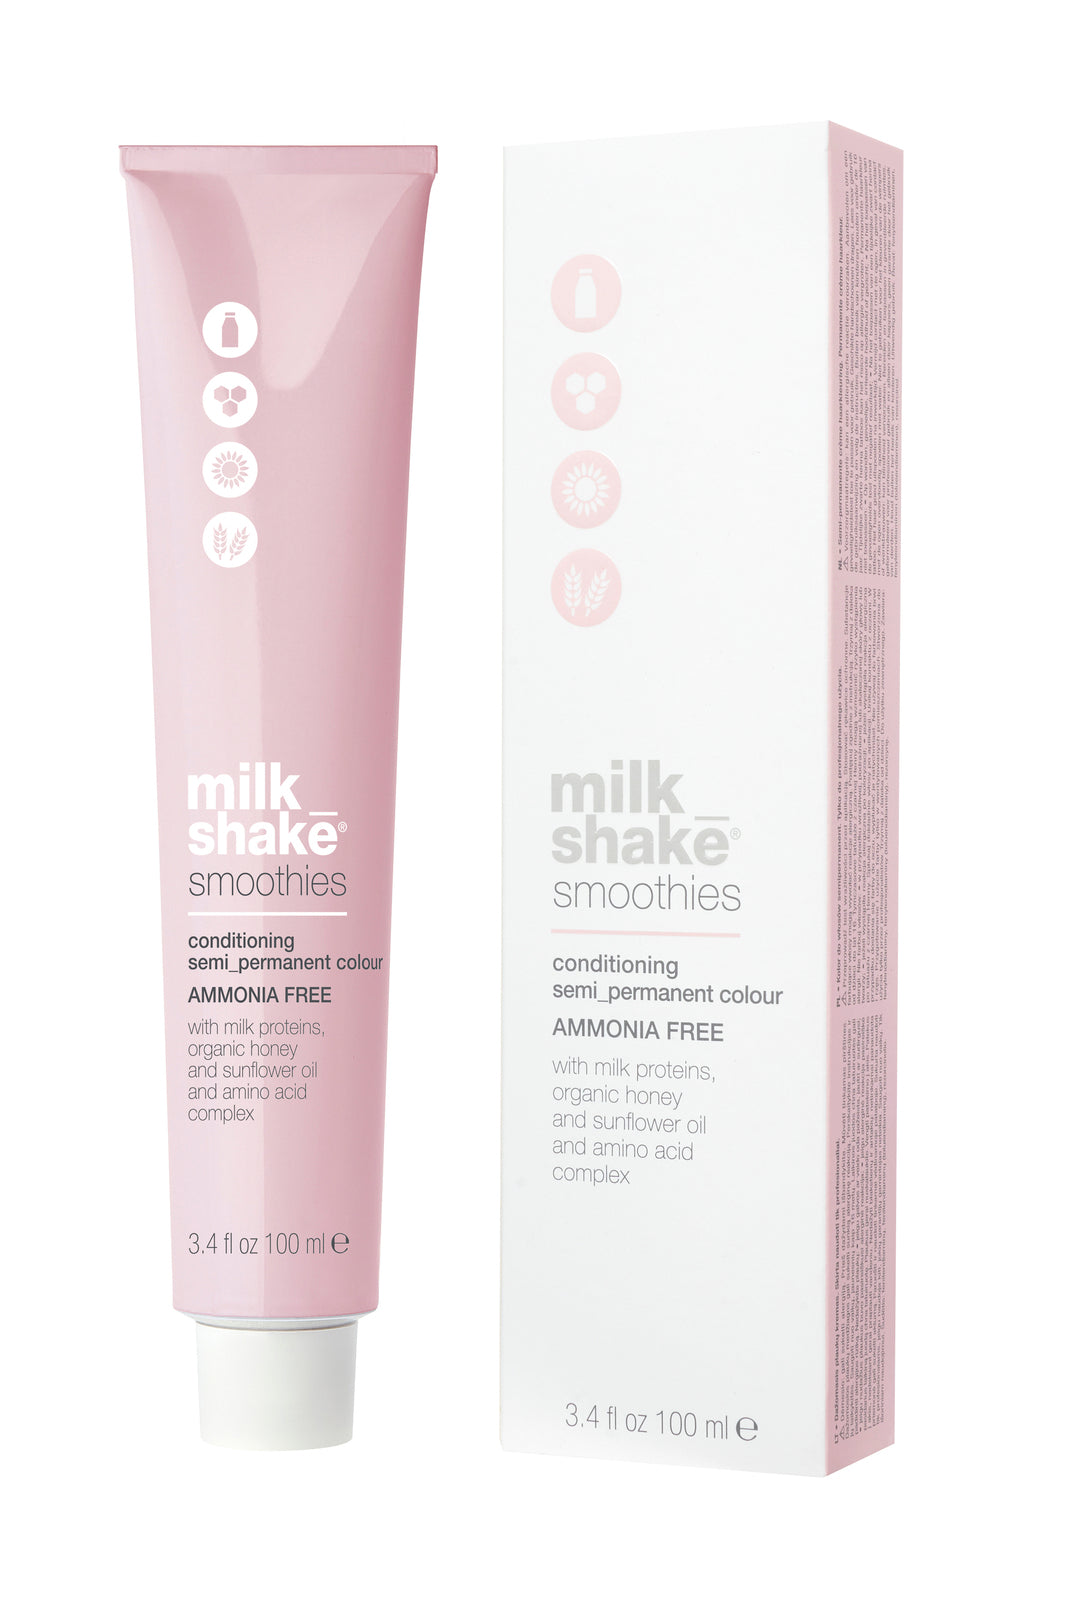 Milkshake smoothies semi-permanent color 5.4